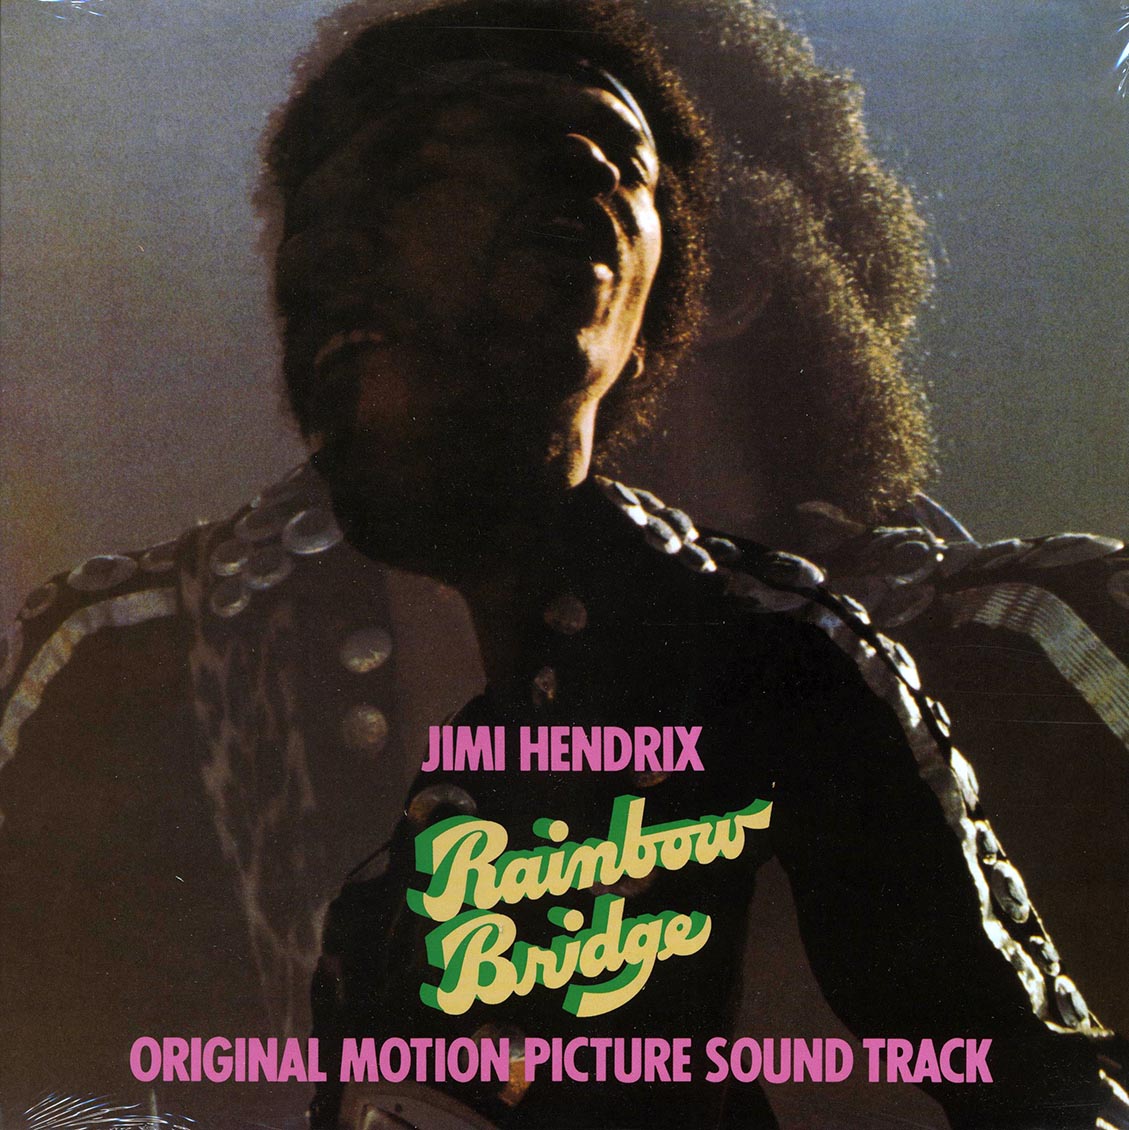 Jimi Hendrix - Rainbow Bridge: Original Motion Picture Soundtrack (180g) (remastered) - Vinyl LP